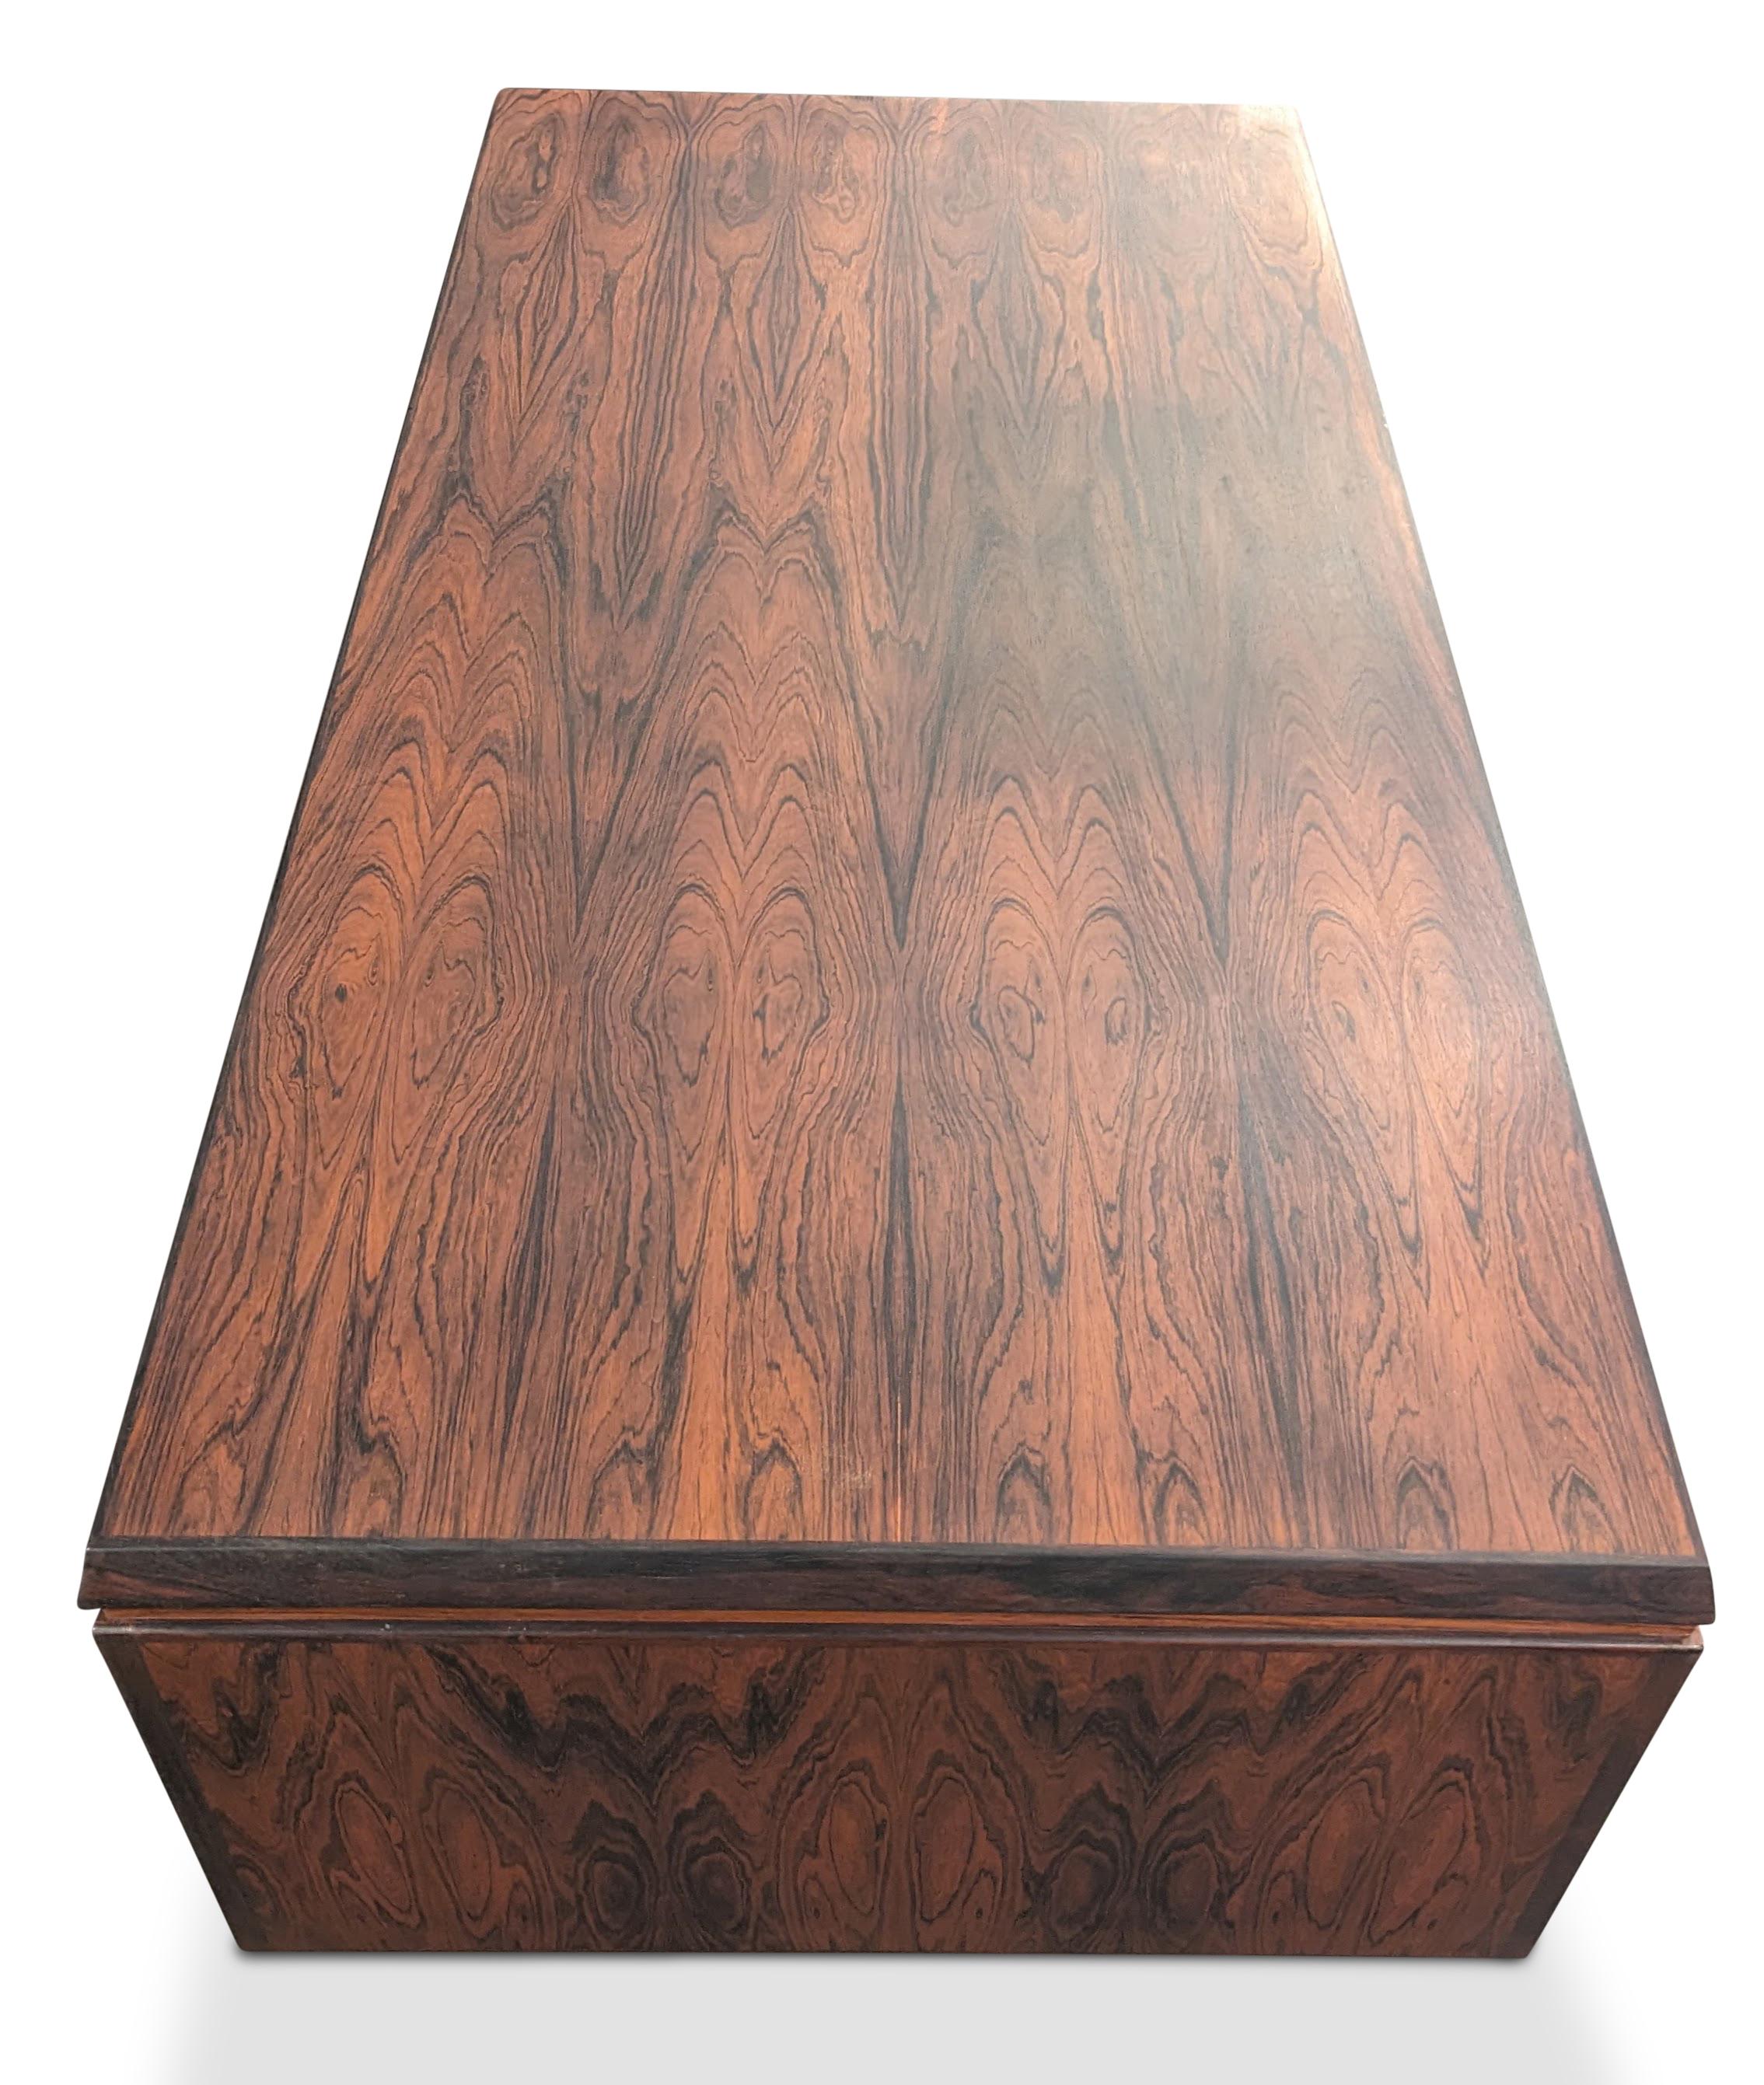 Vintage Danish Mid Century Large Rosewood Desk - 072315 For Sale 4